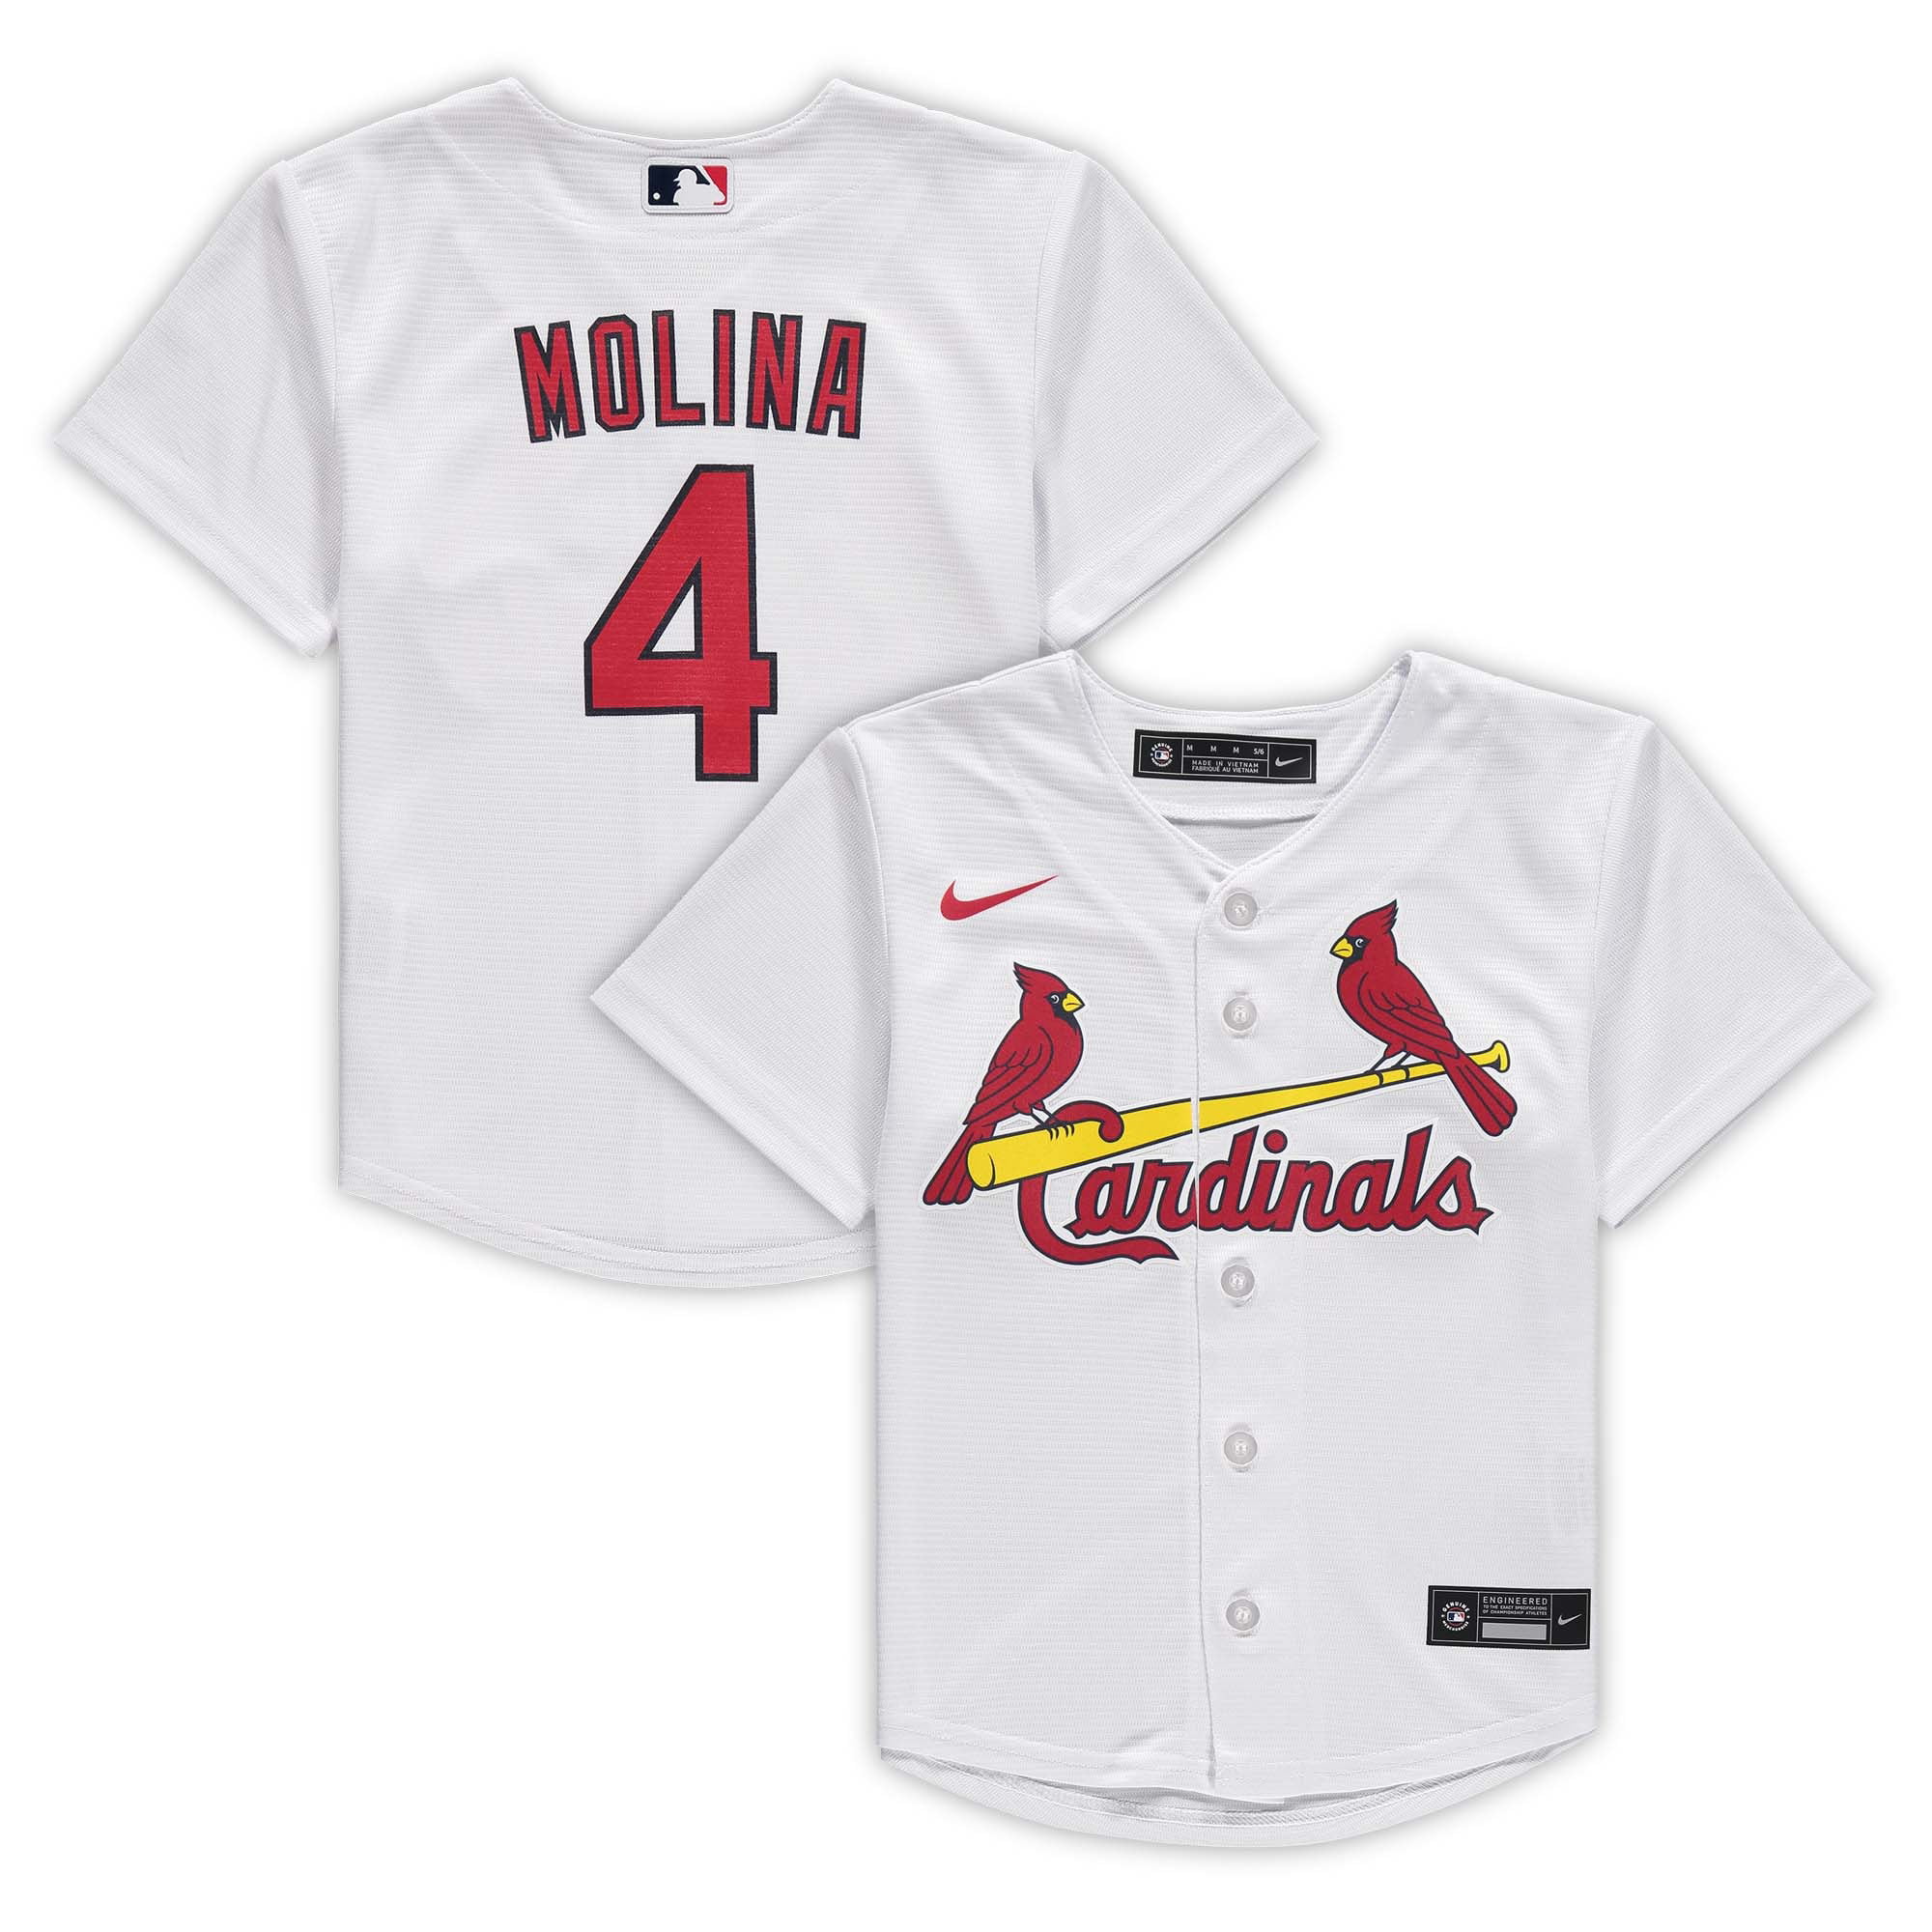 yadier molina cardinals jersey